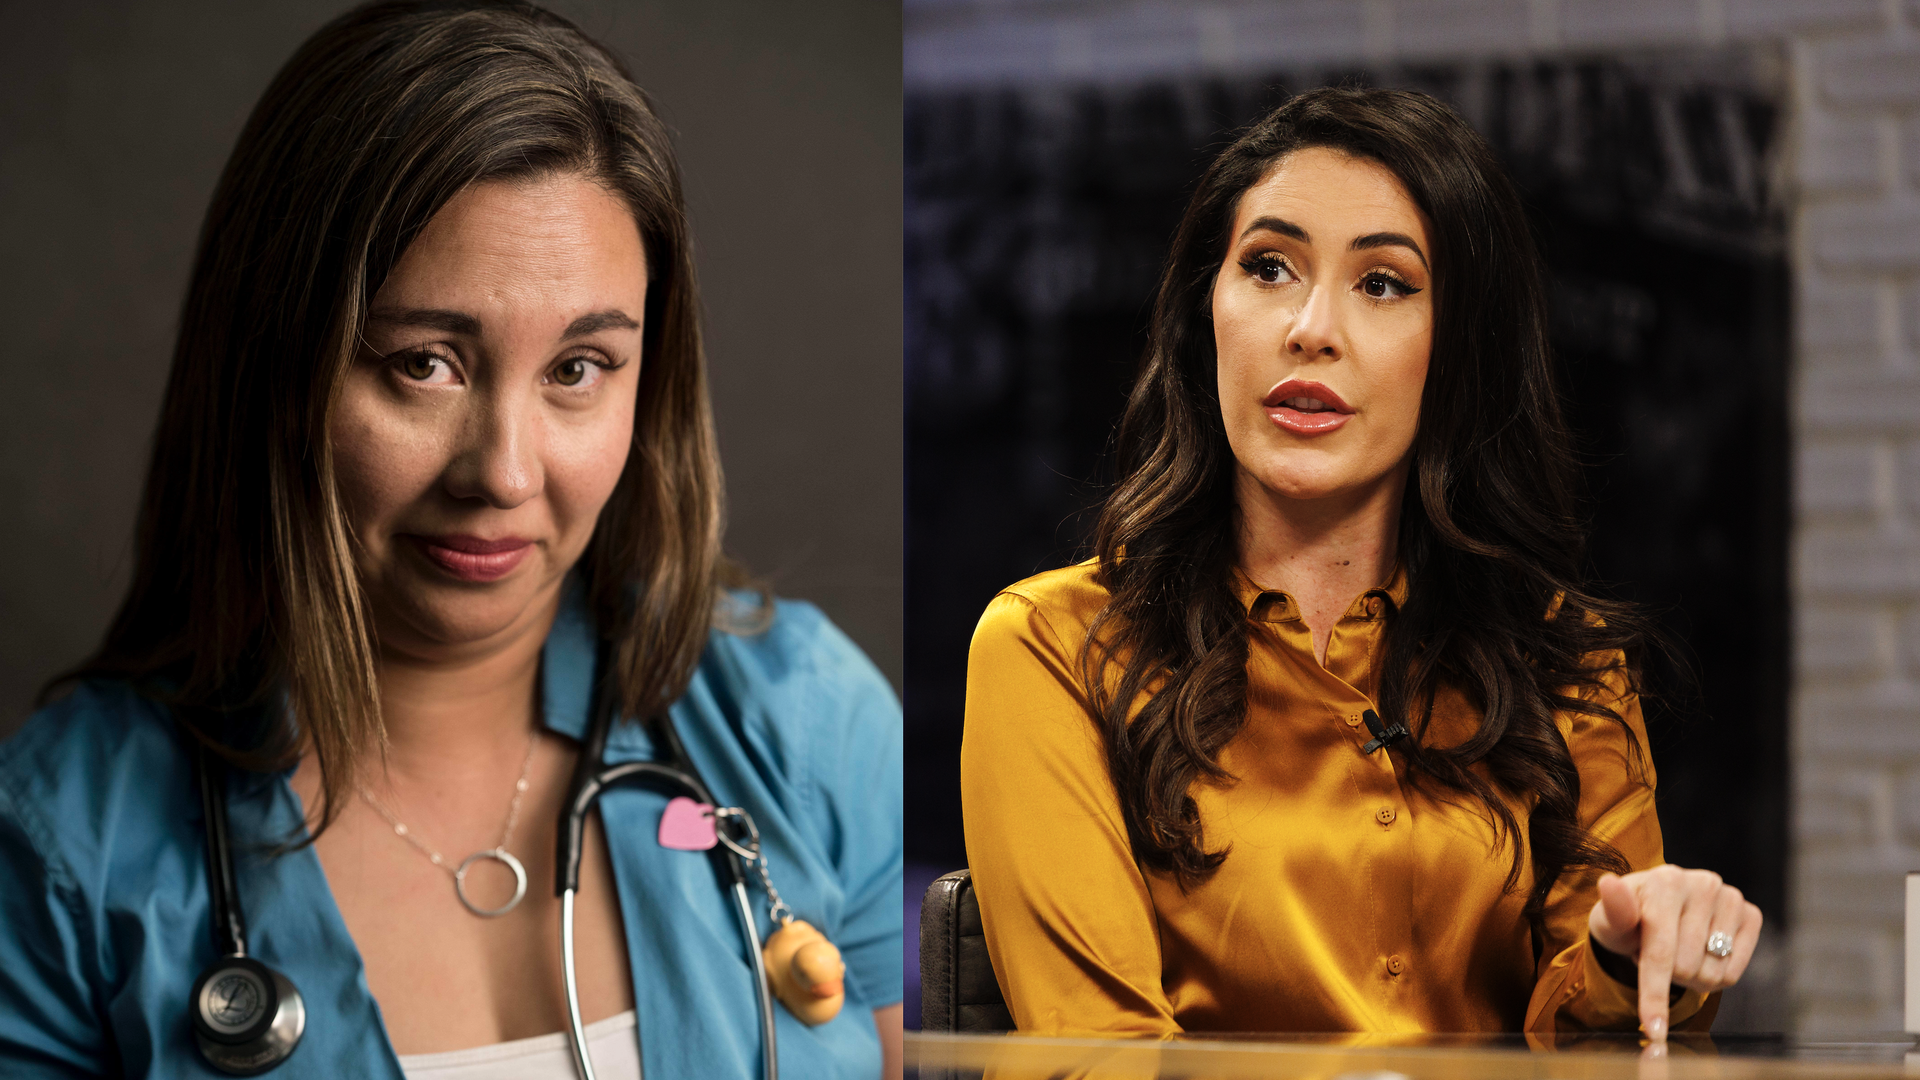 Pediatrician Dr. Yadira Caraveo, a Colorado Democrat, is pictured next to Anna Paulina Luna, a Florida Republican in side-by-side photos.